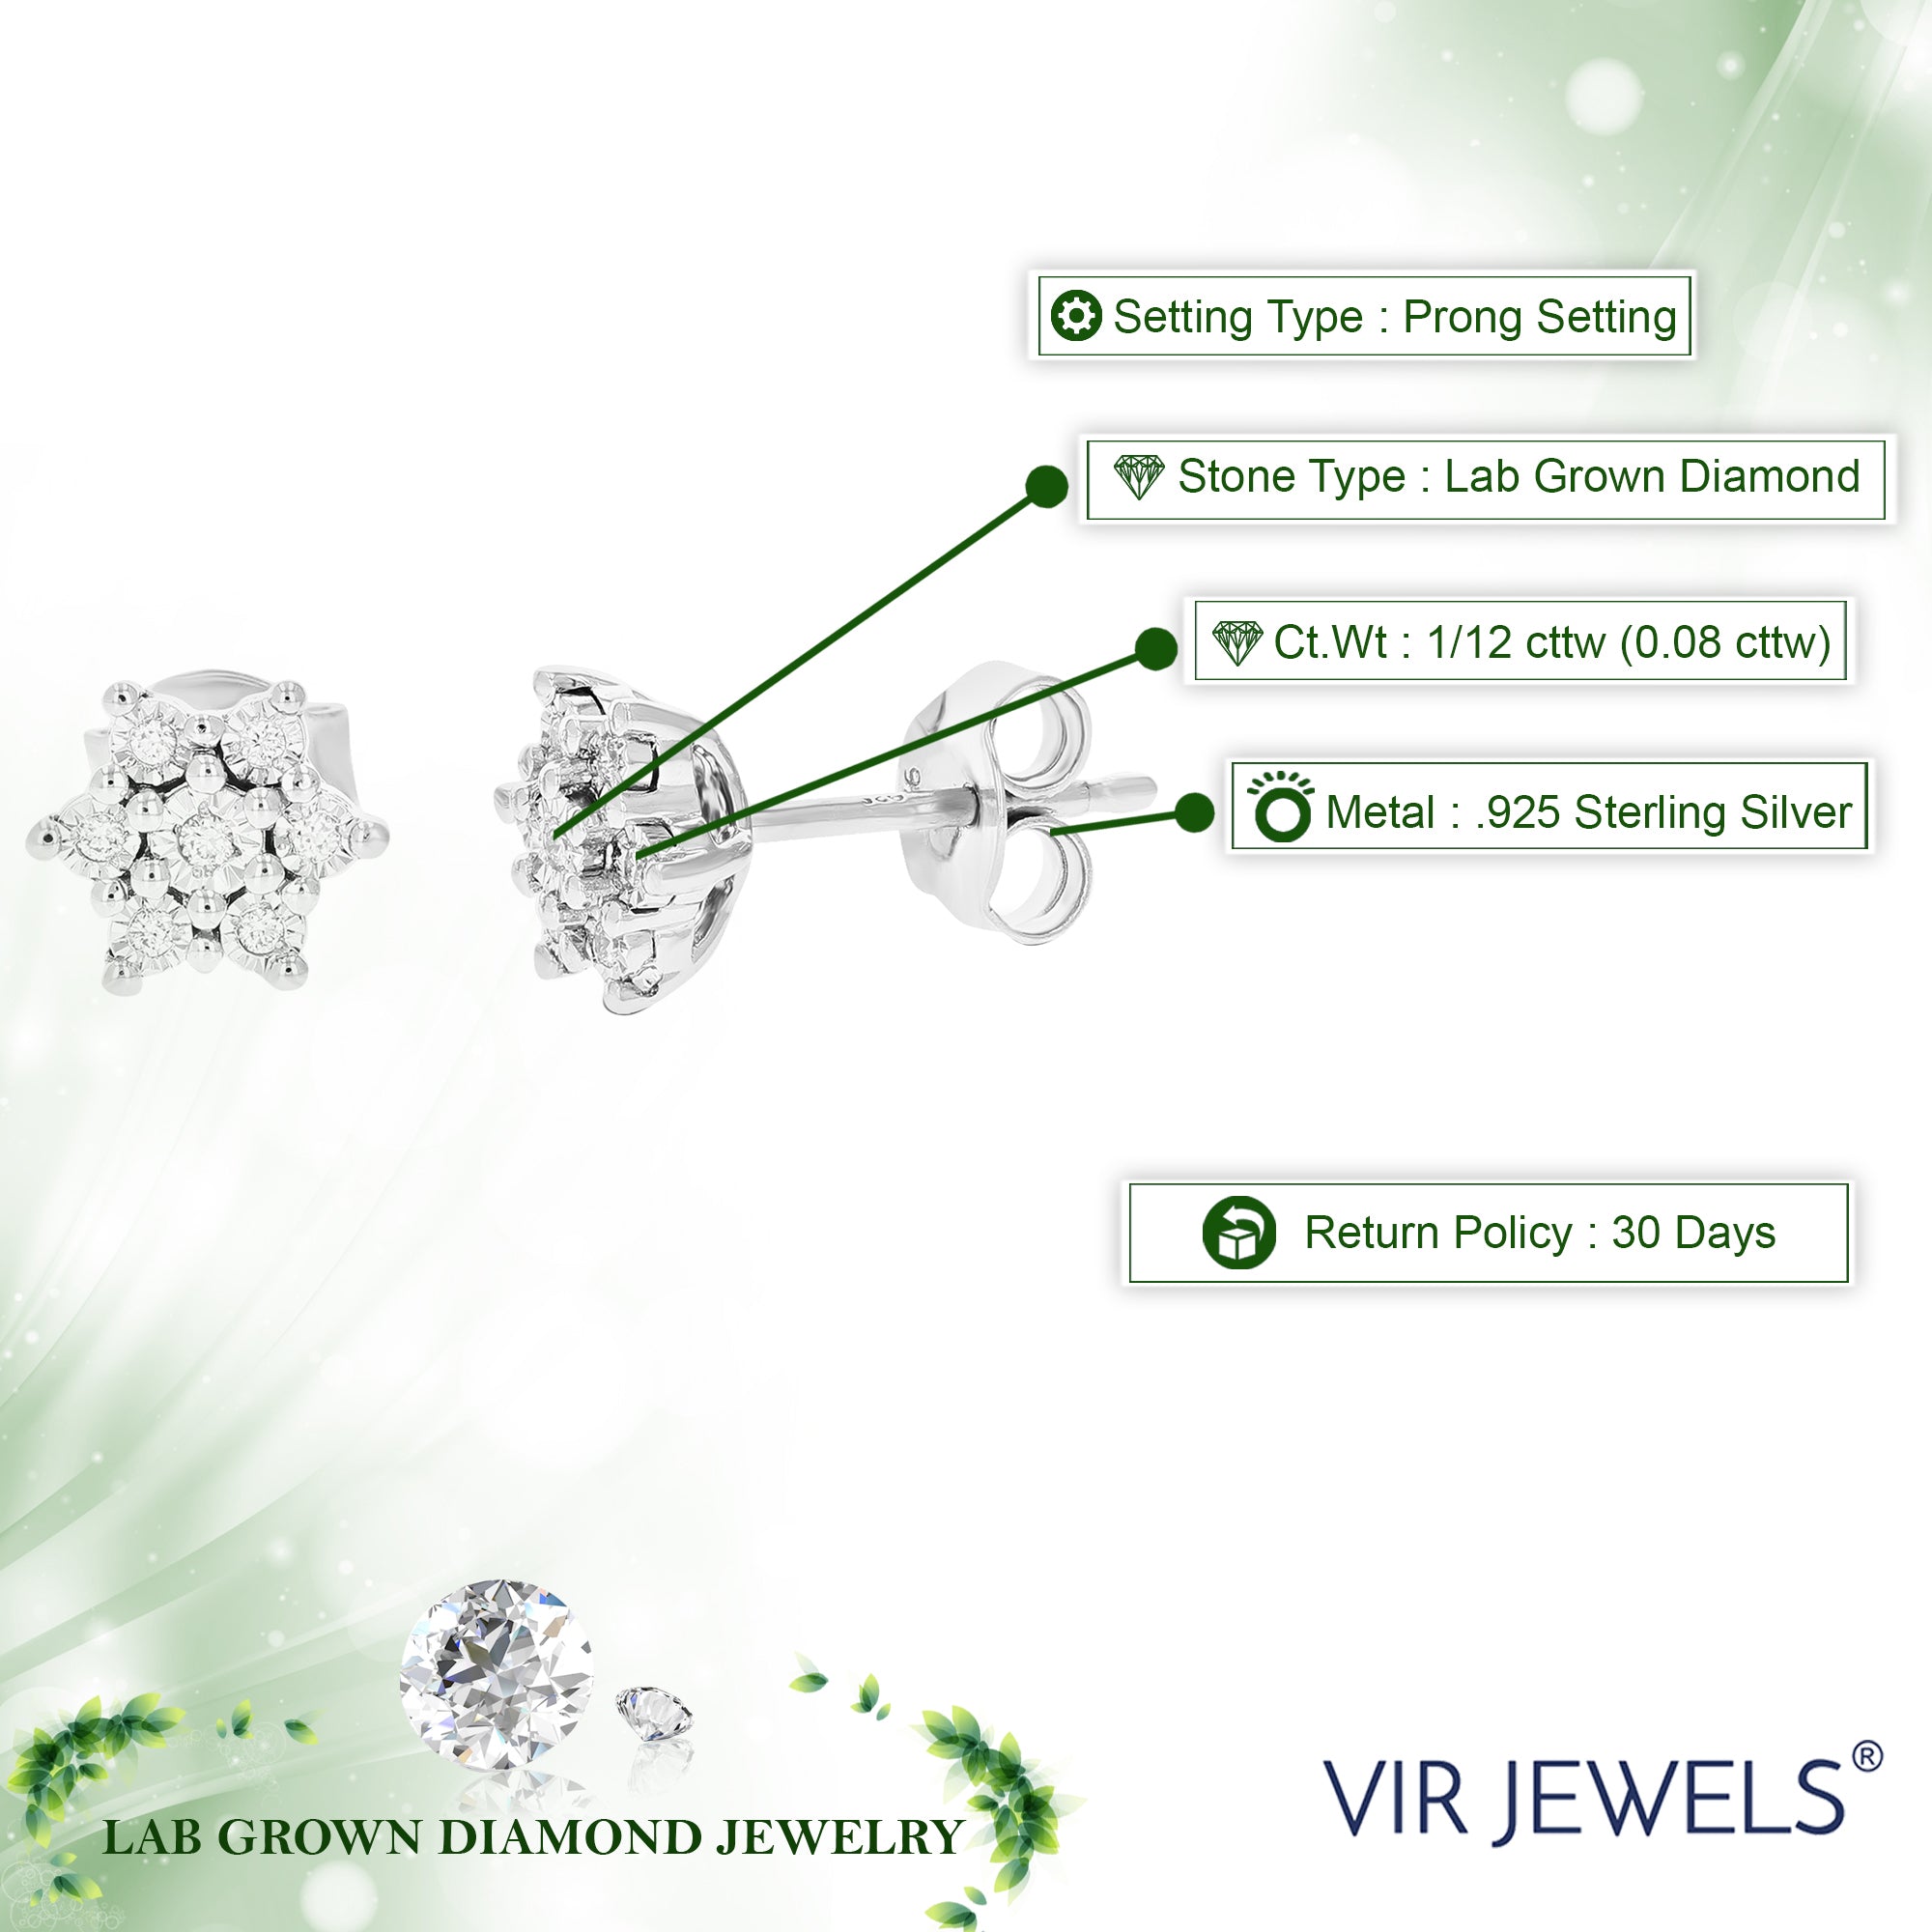 1/12 cttw Stud Earrings for Women, Round Lab Grown Diamond Stud Earrings in .925 Sterling Silver | Prong Setting